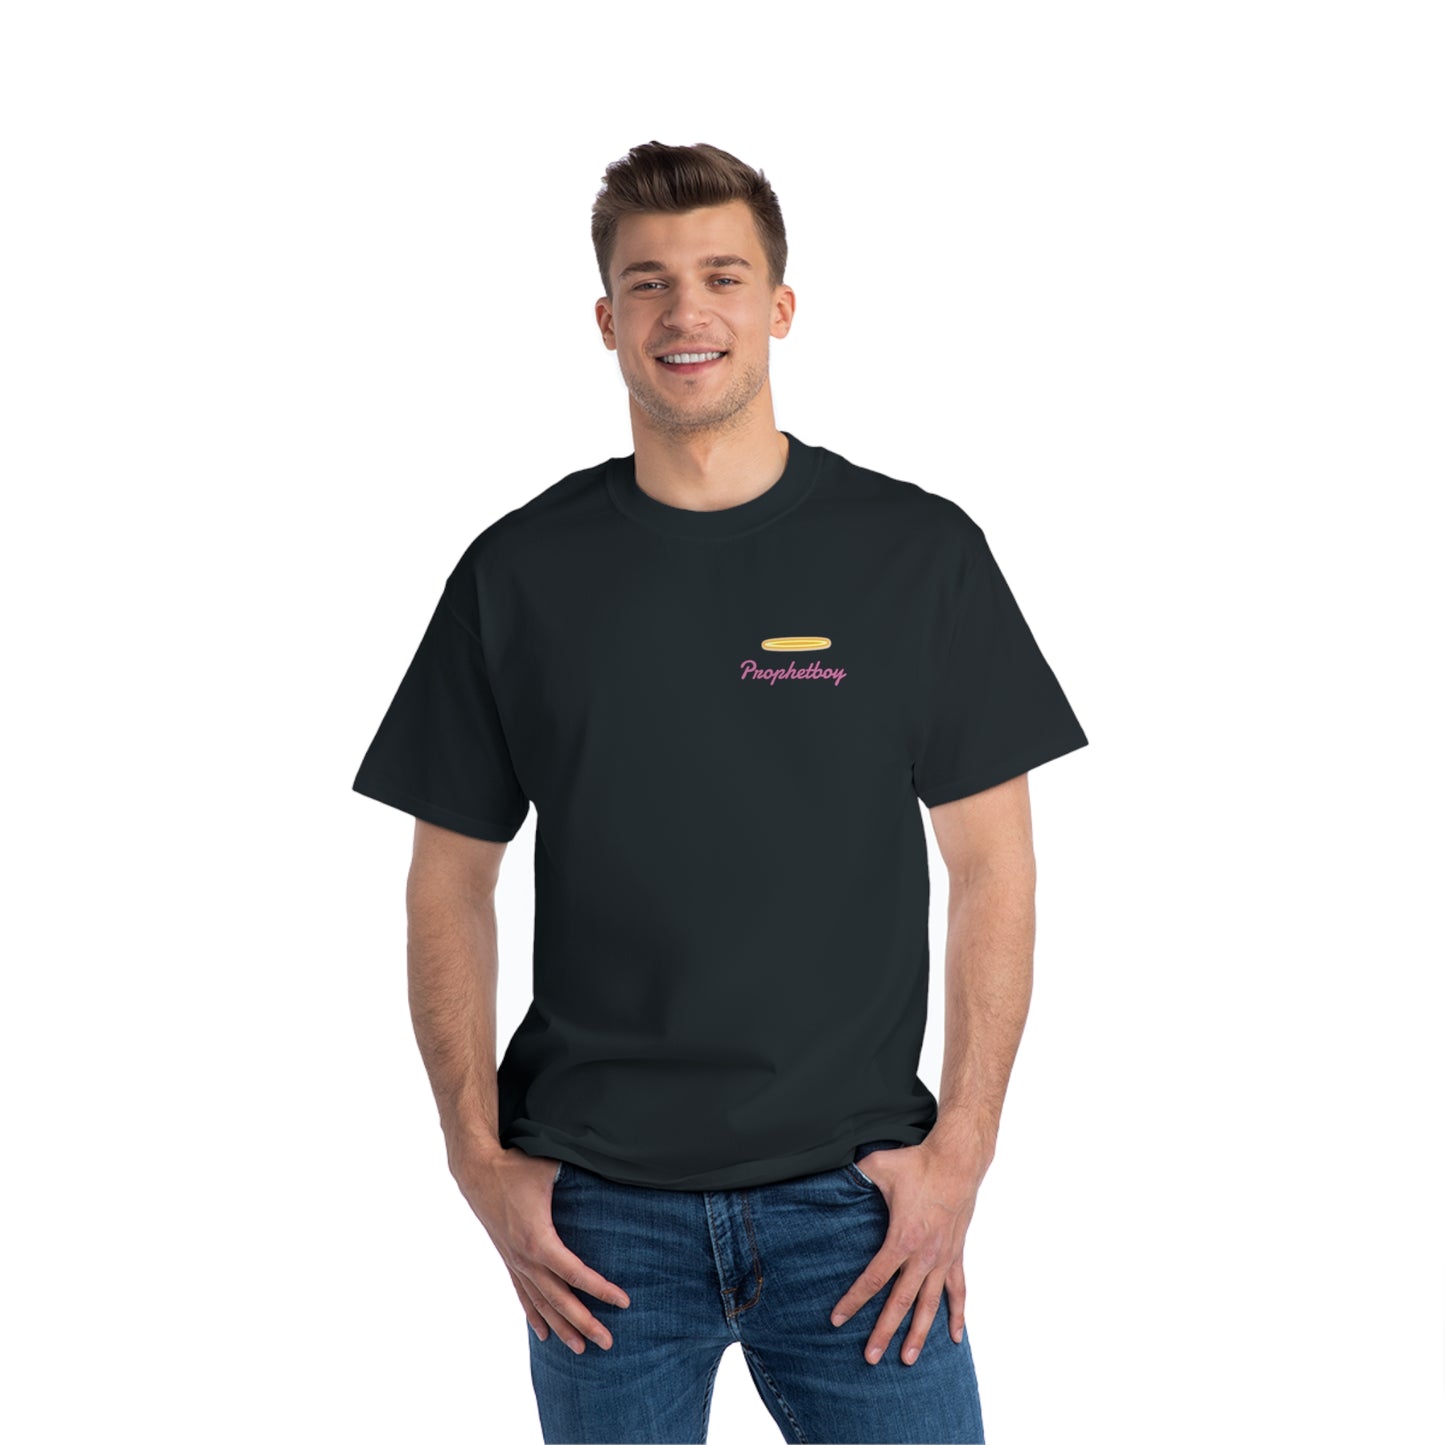 Prophetboy "PROPHETIC LOVE" Short-Sleeve T-Shirt